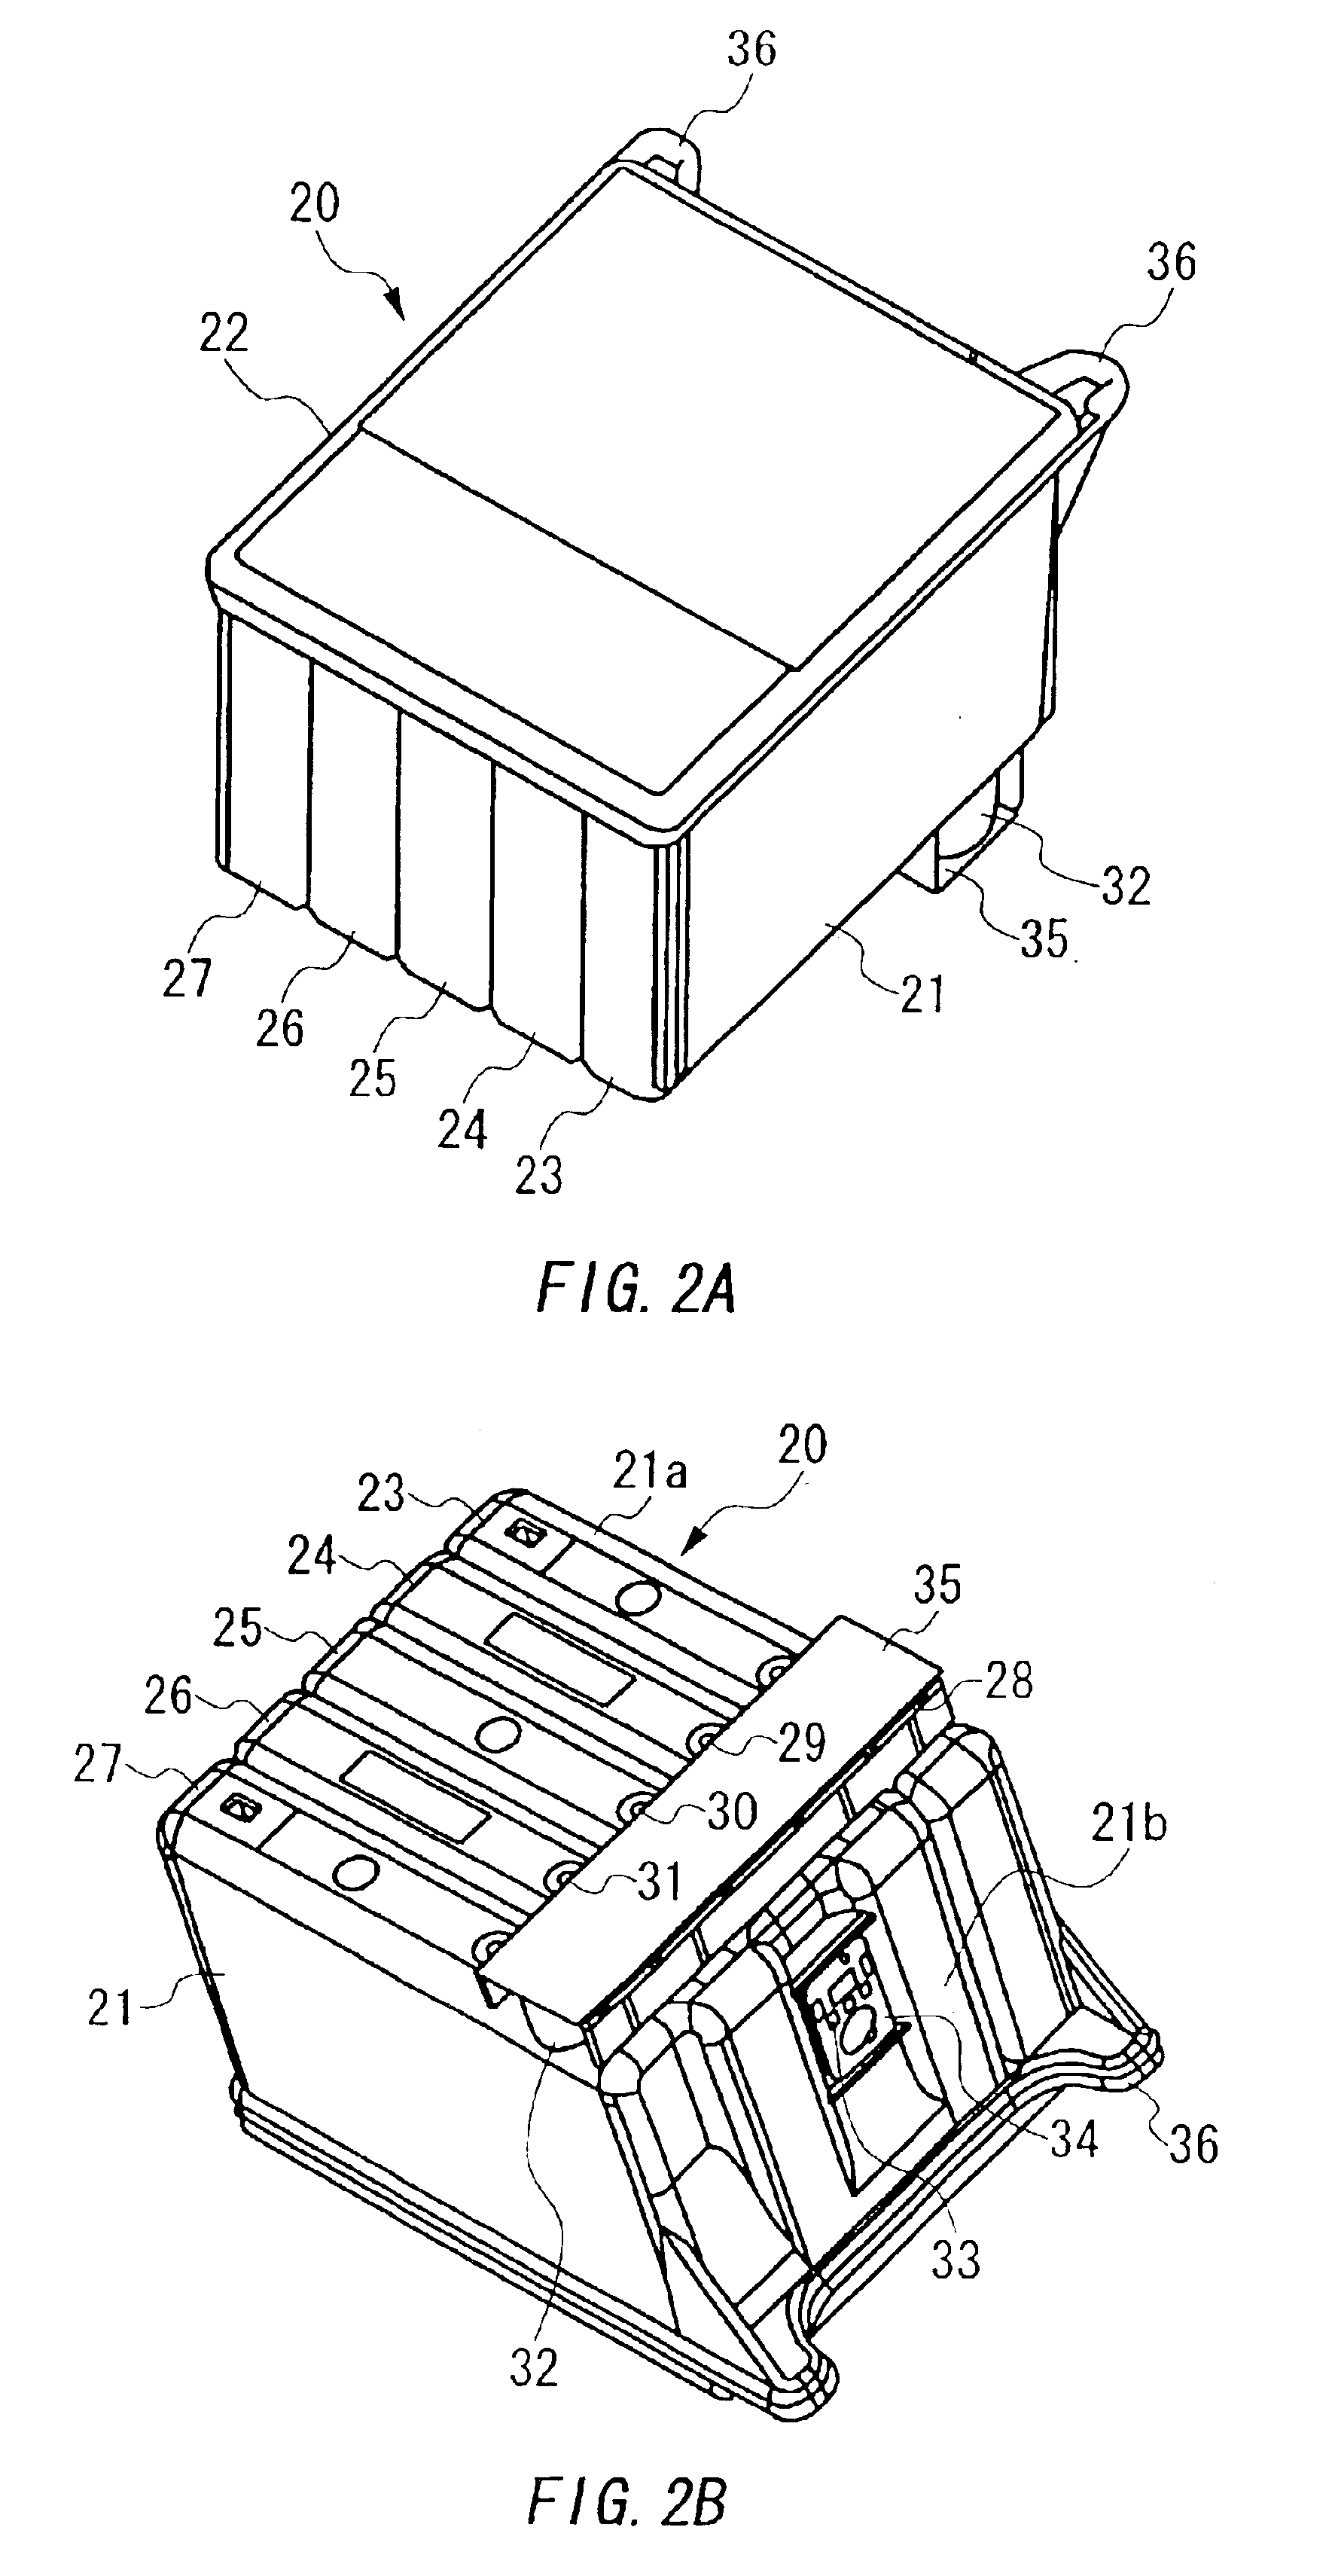 Ink cartridge for ink-jet printing apparatus